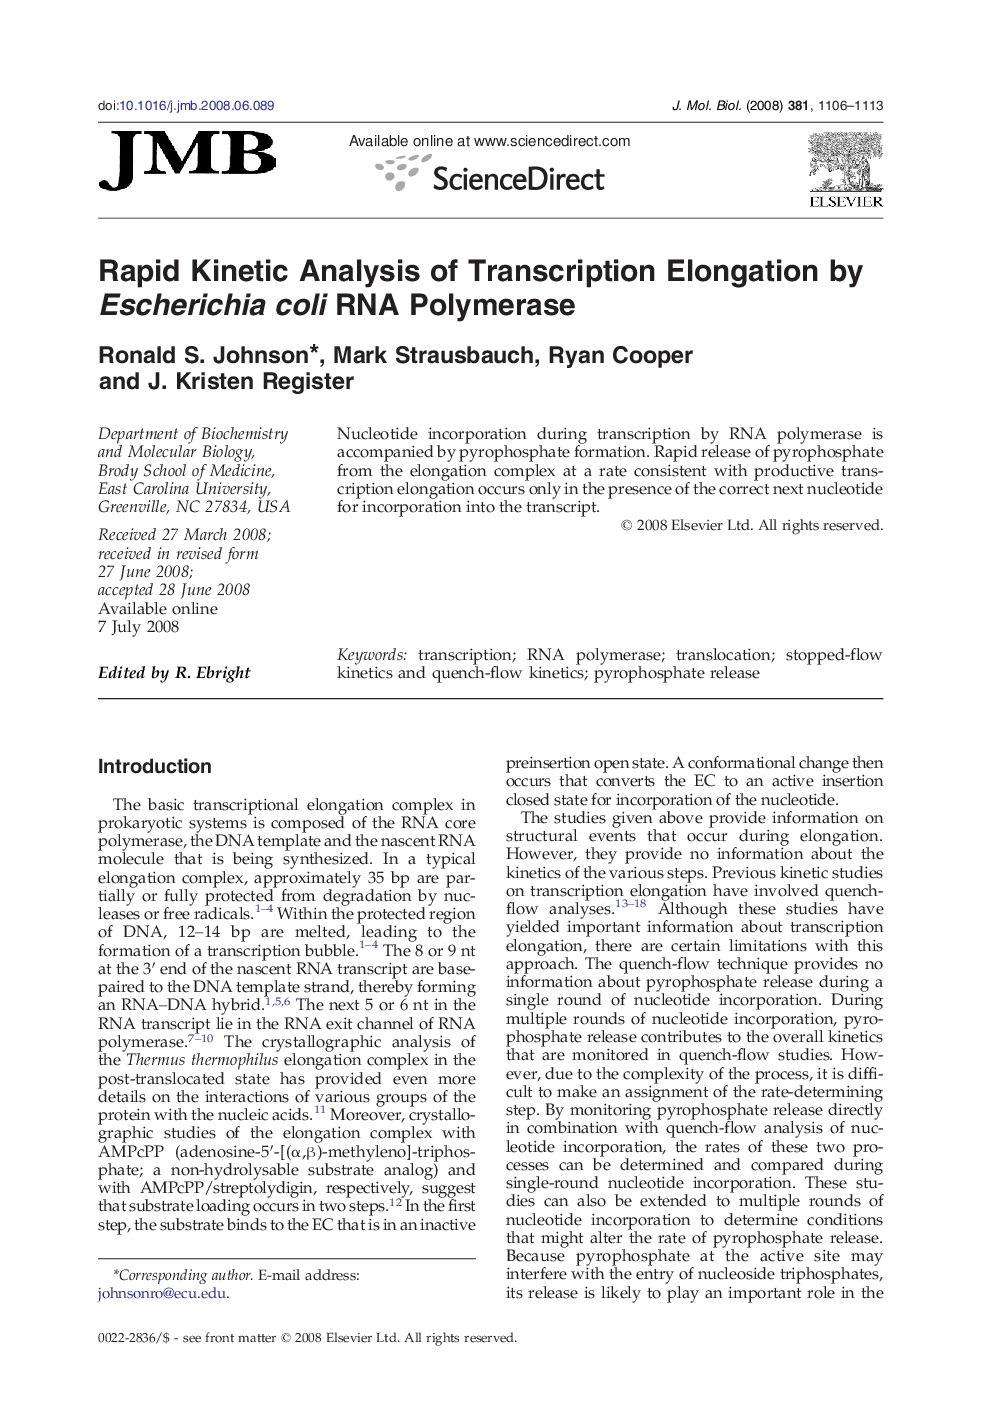 Rapid Kinetic Analysis of Transcription Elongation by Escherichia coli RNA Polymerase